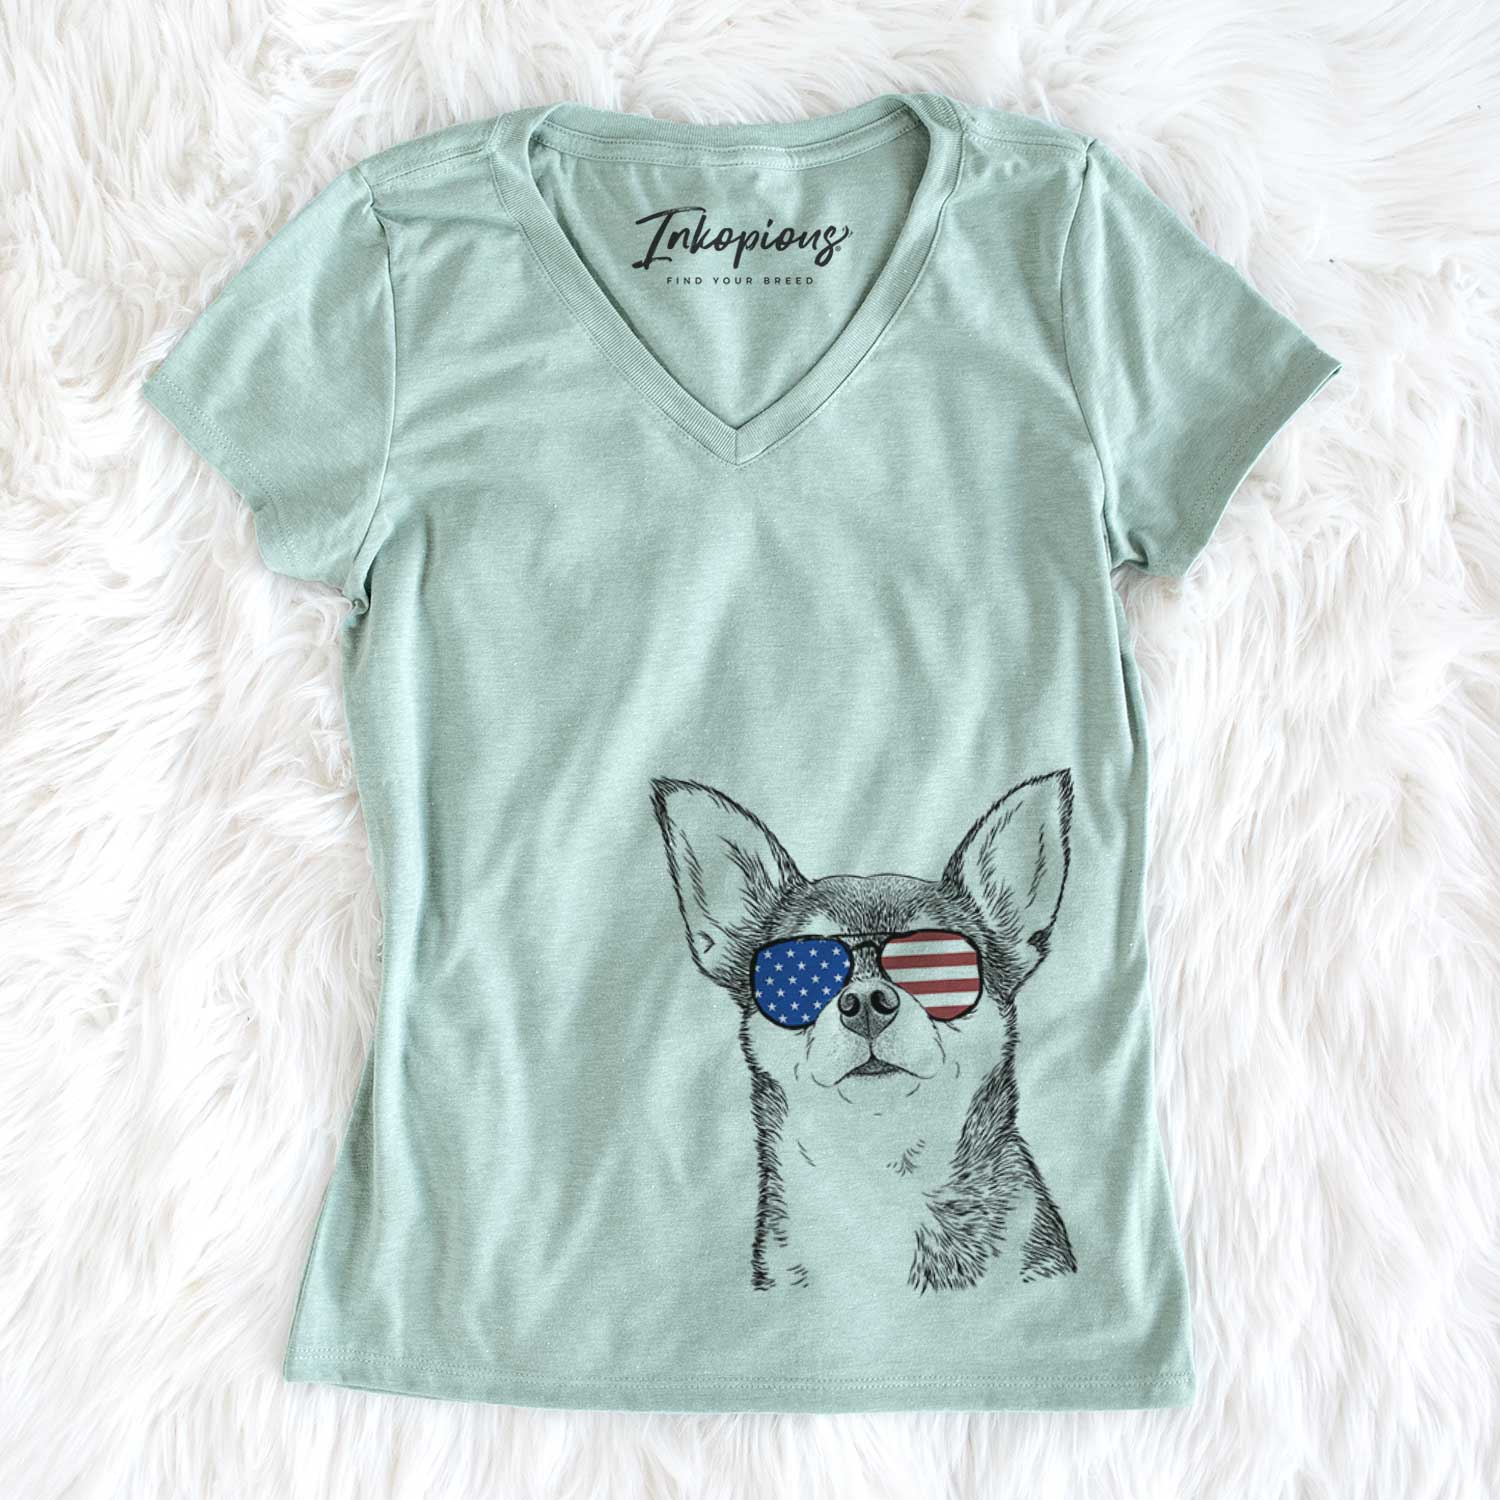 USA Baby the Chihuahua - Women's Perfect V-neck Shirt